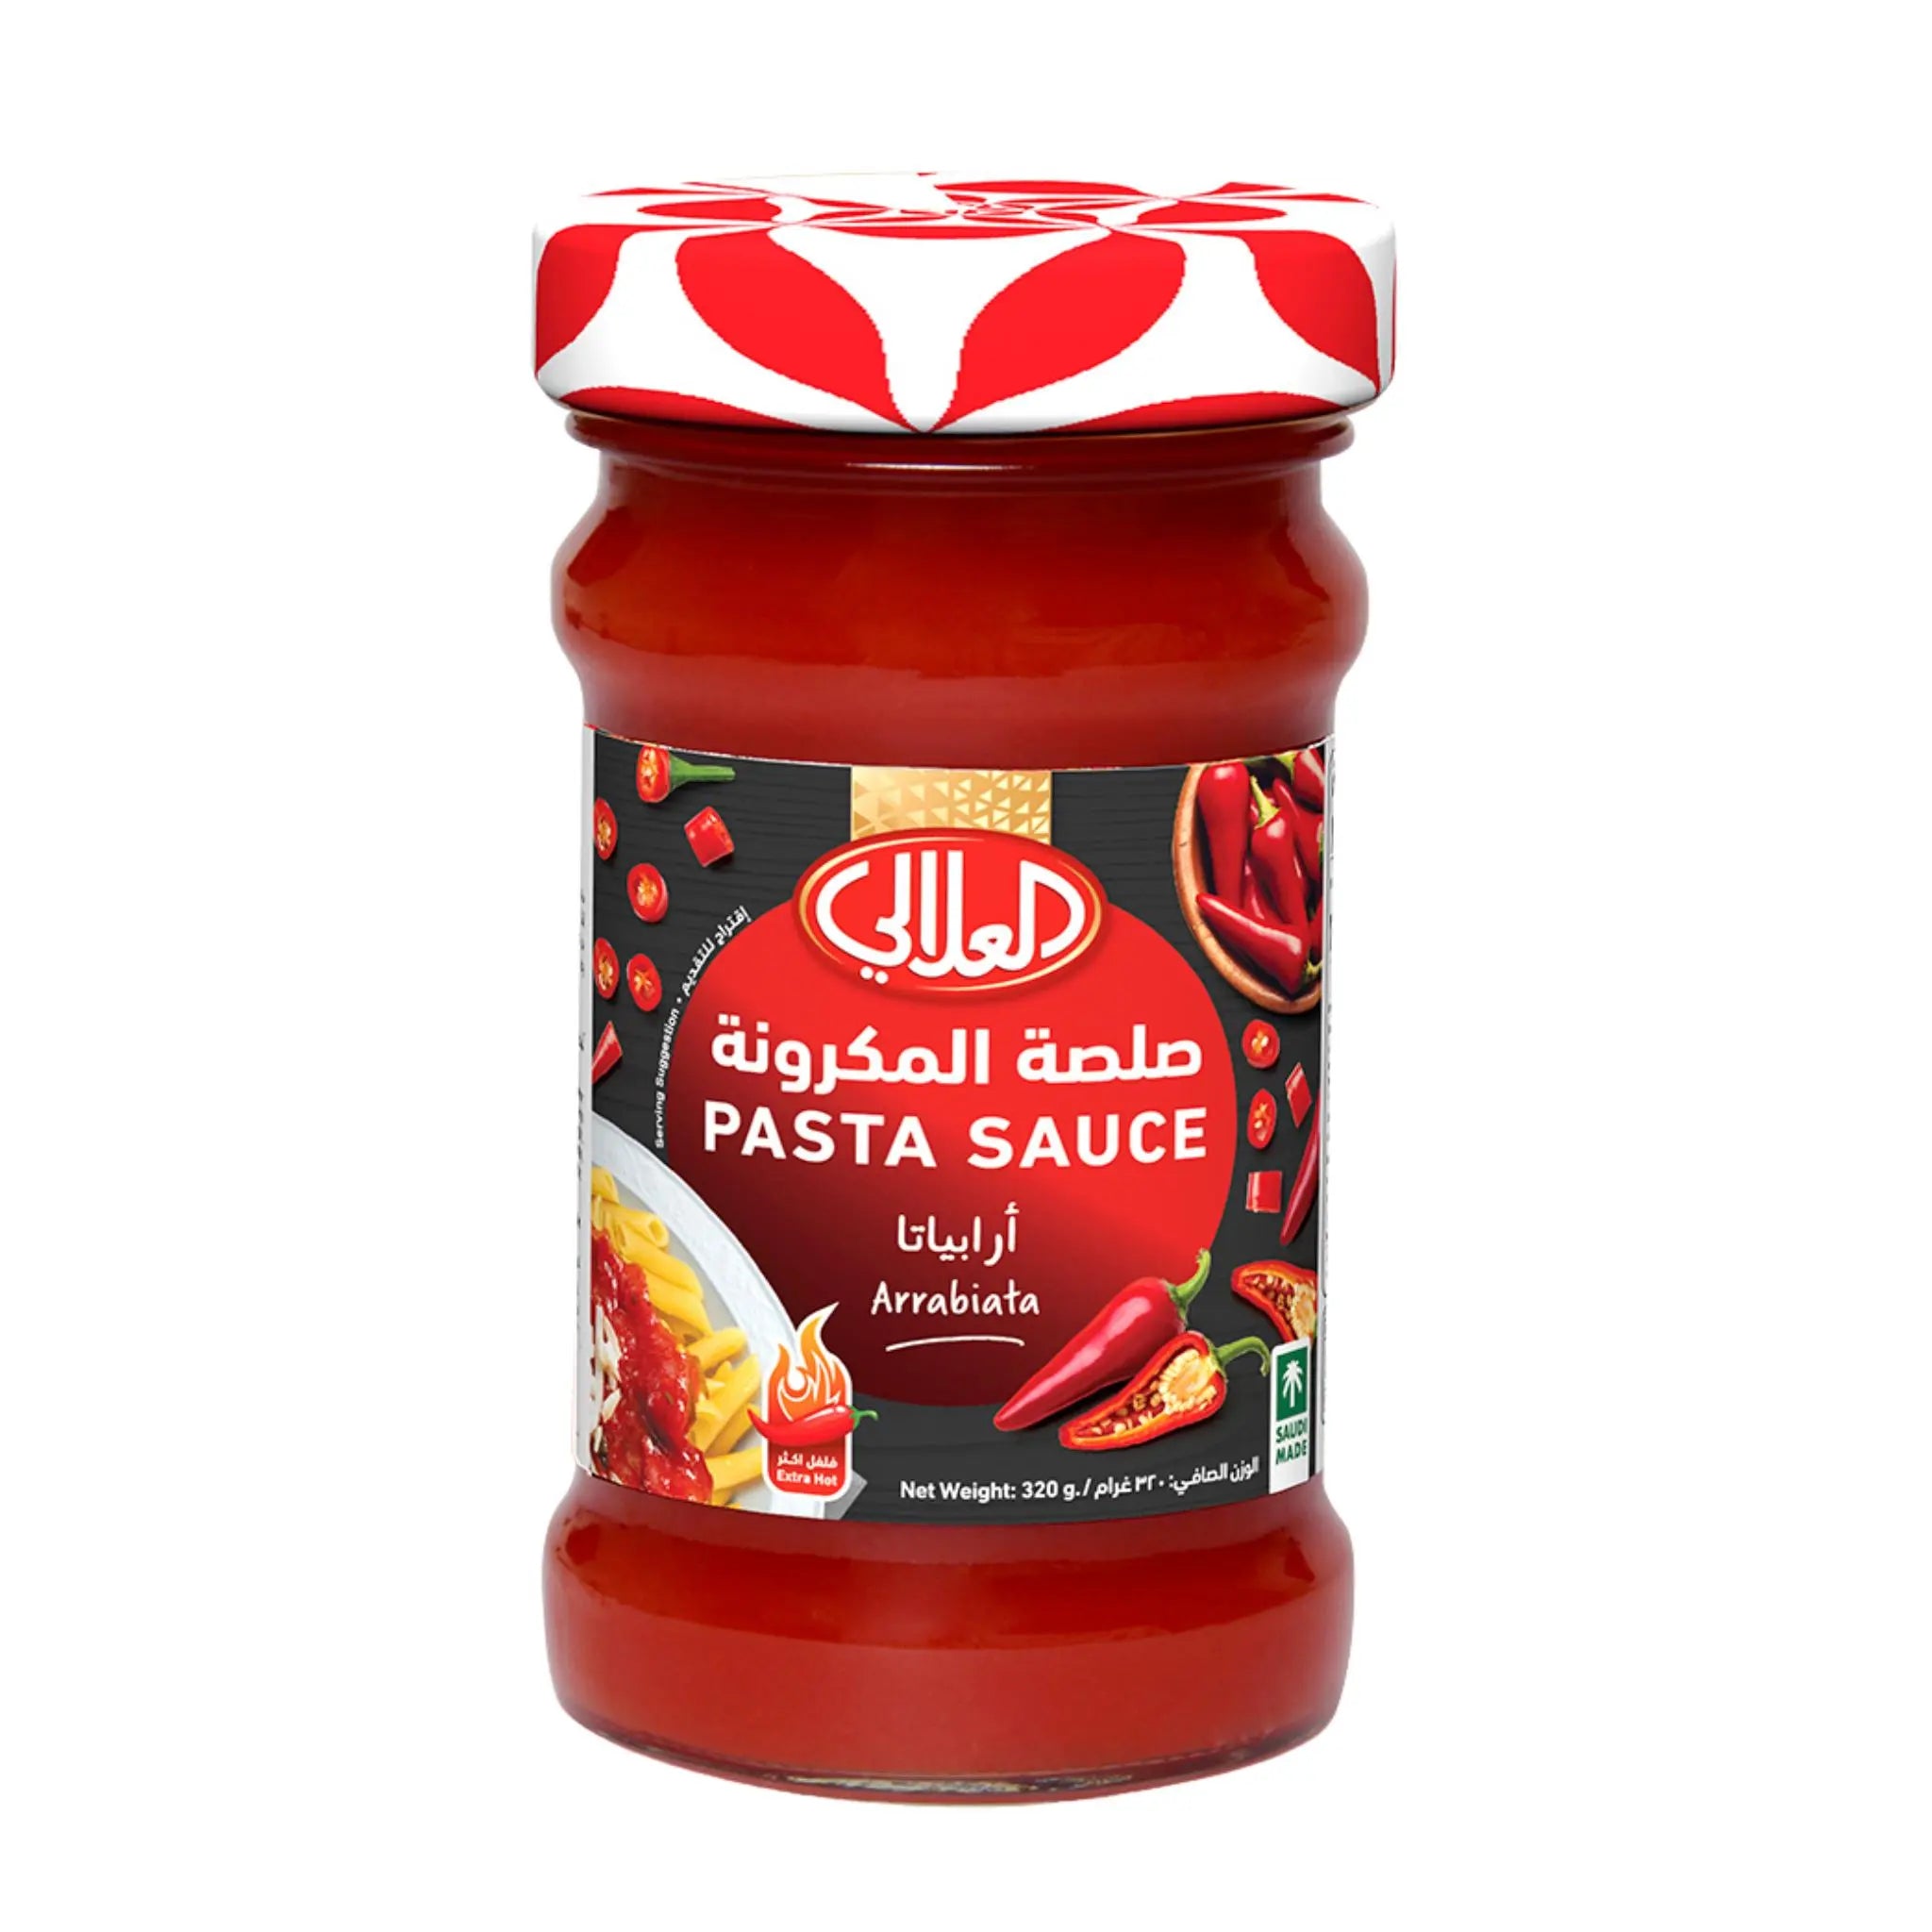 Al Alali Pasta Sauce Arrabiata 320g - 12x320g (1 carton) - Marino.AE